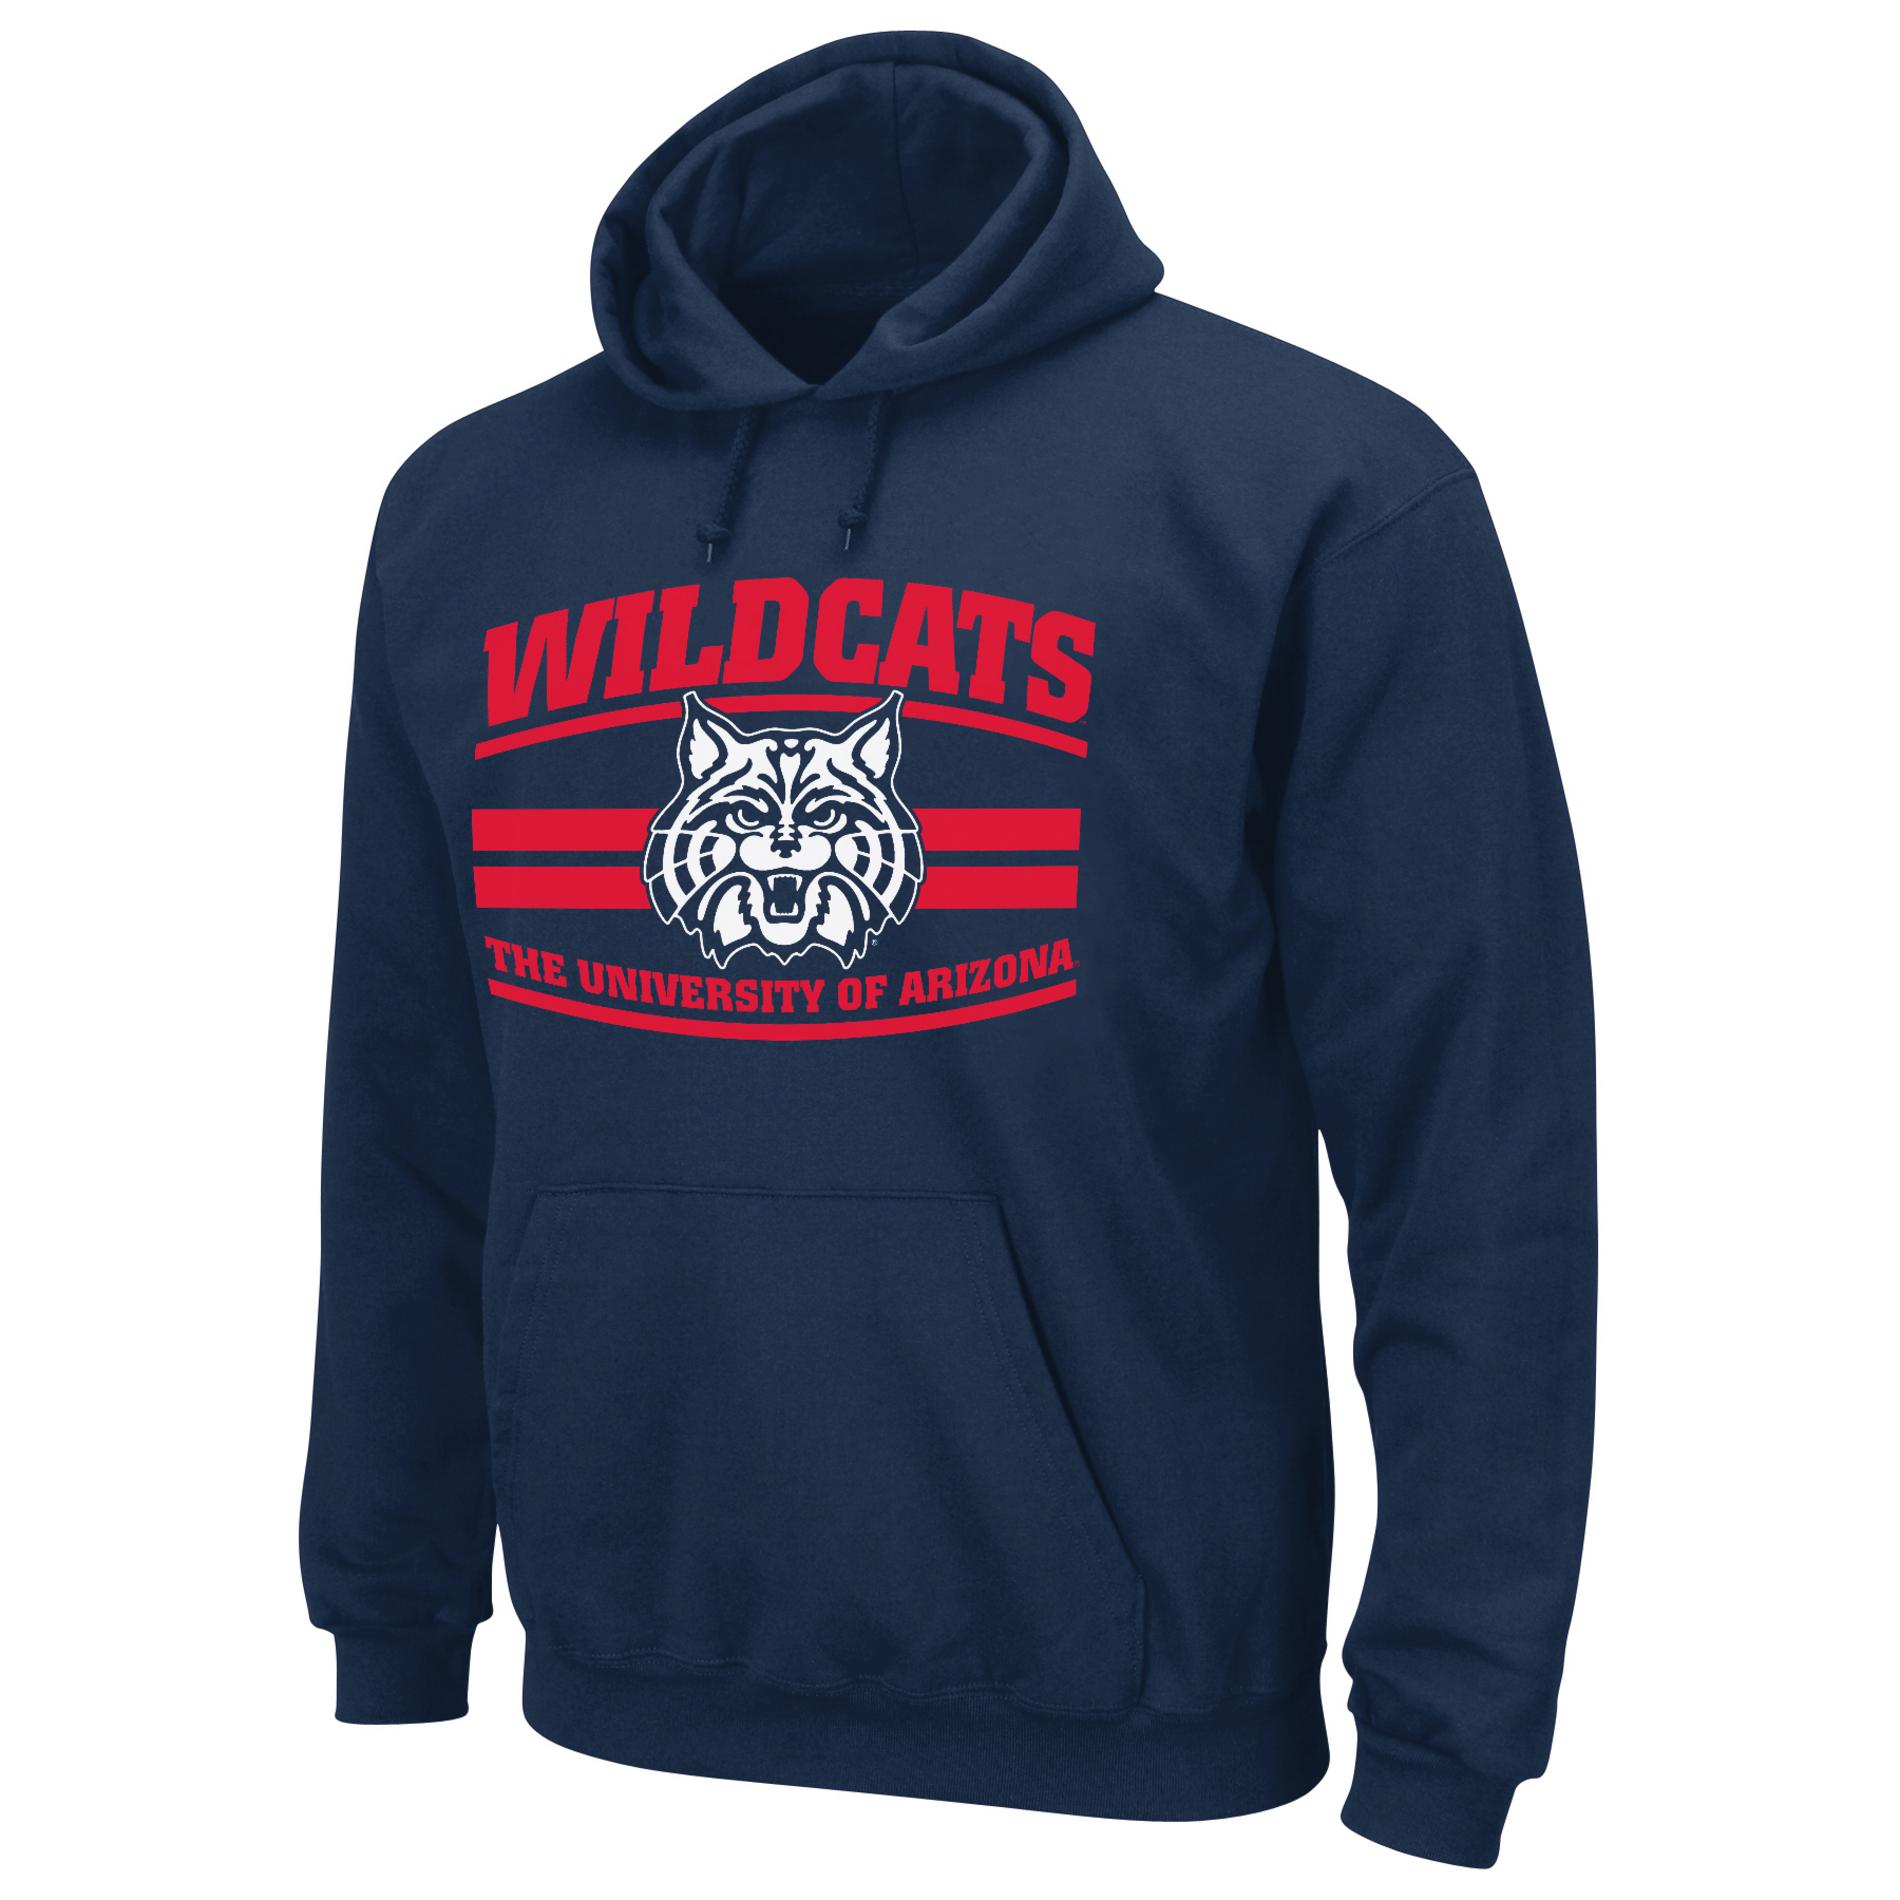 NCAA Men's Hooded Sweatshirt - University of Arizona Wildcats